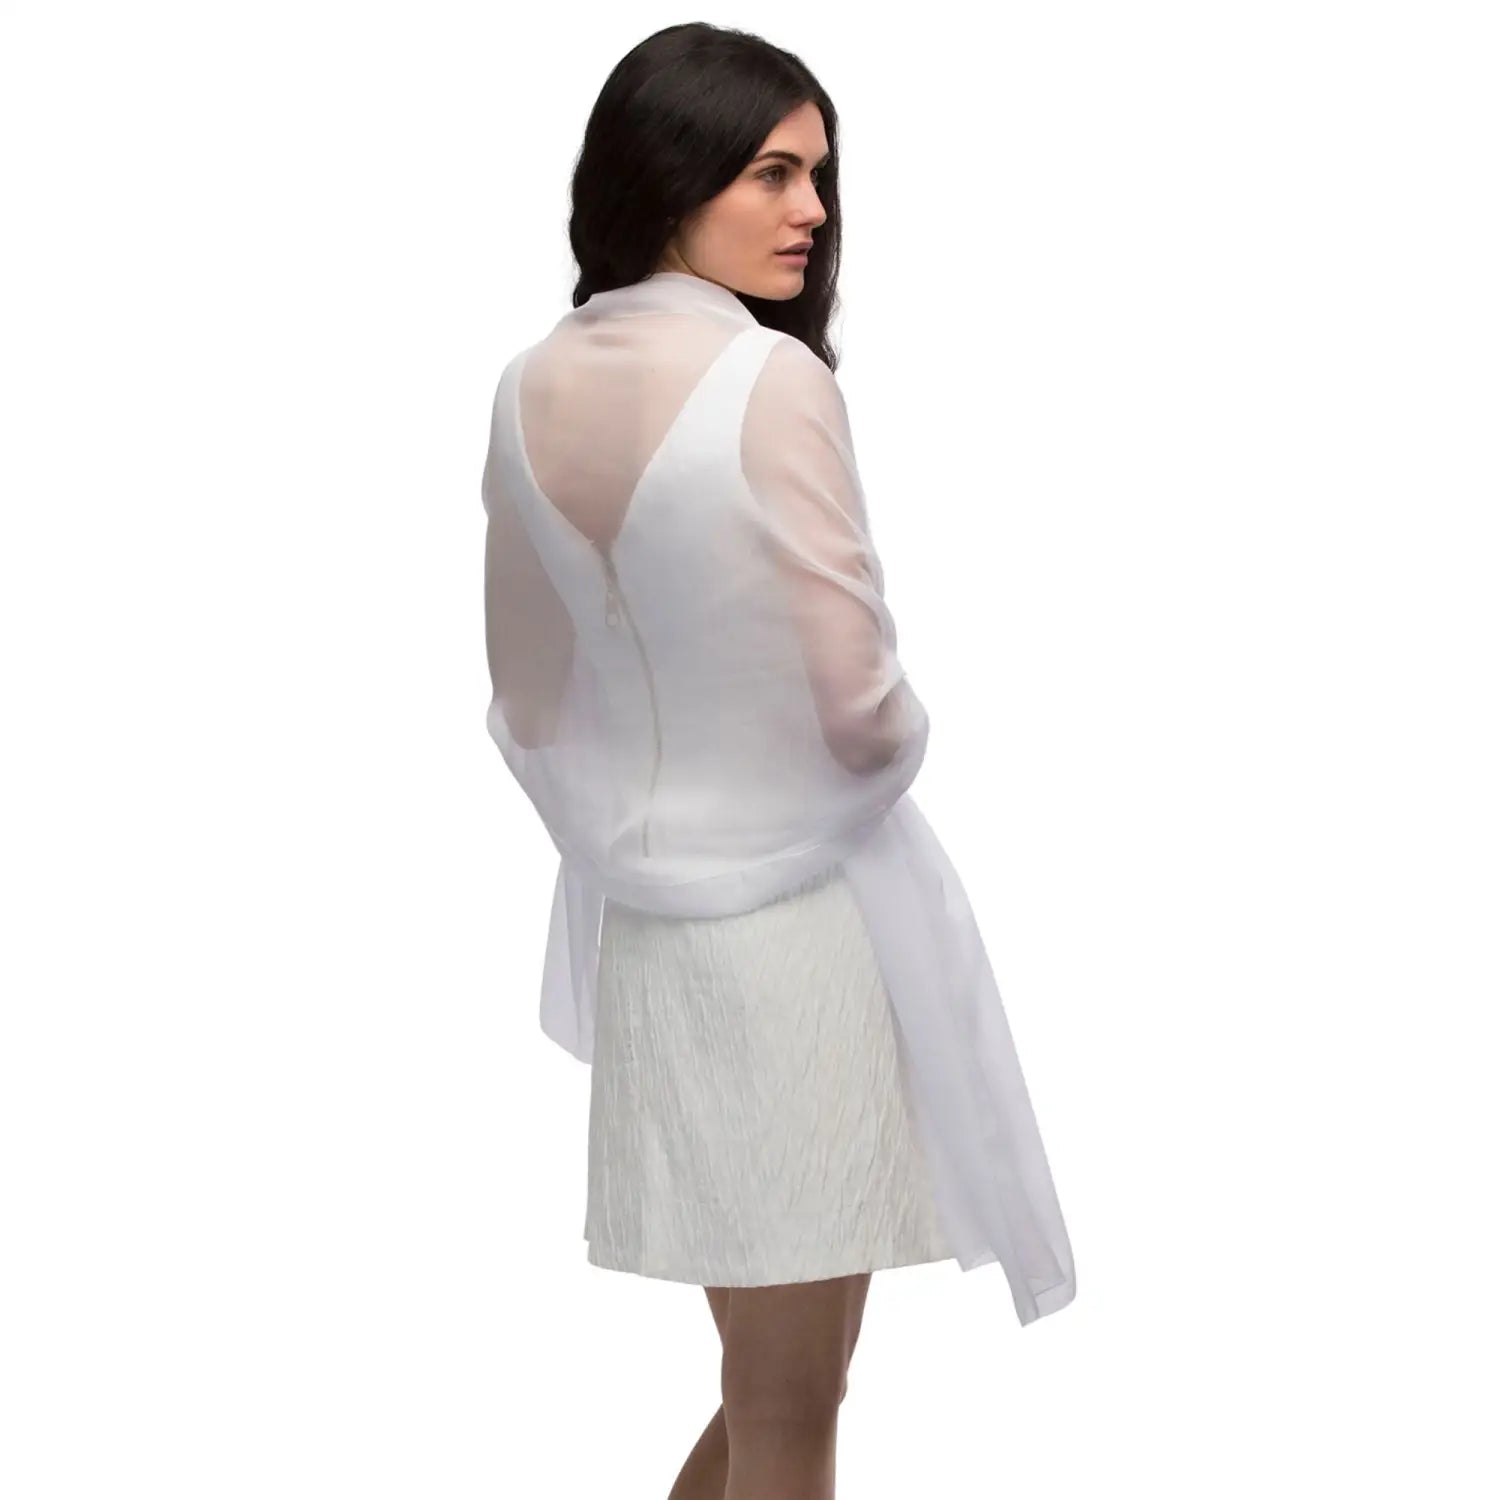 Plain chiffon shawl semi-opaque in white, worn by a woman